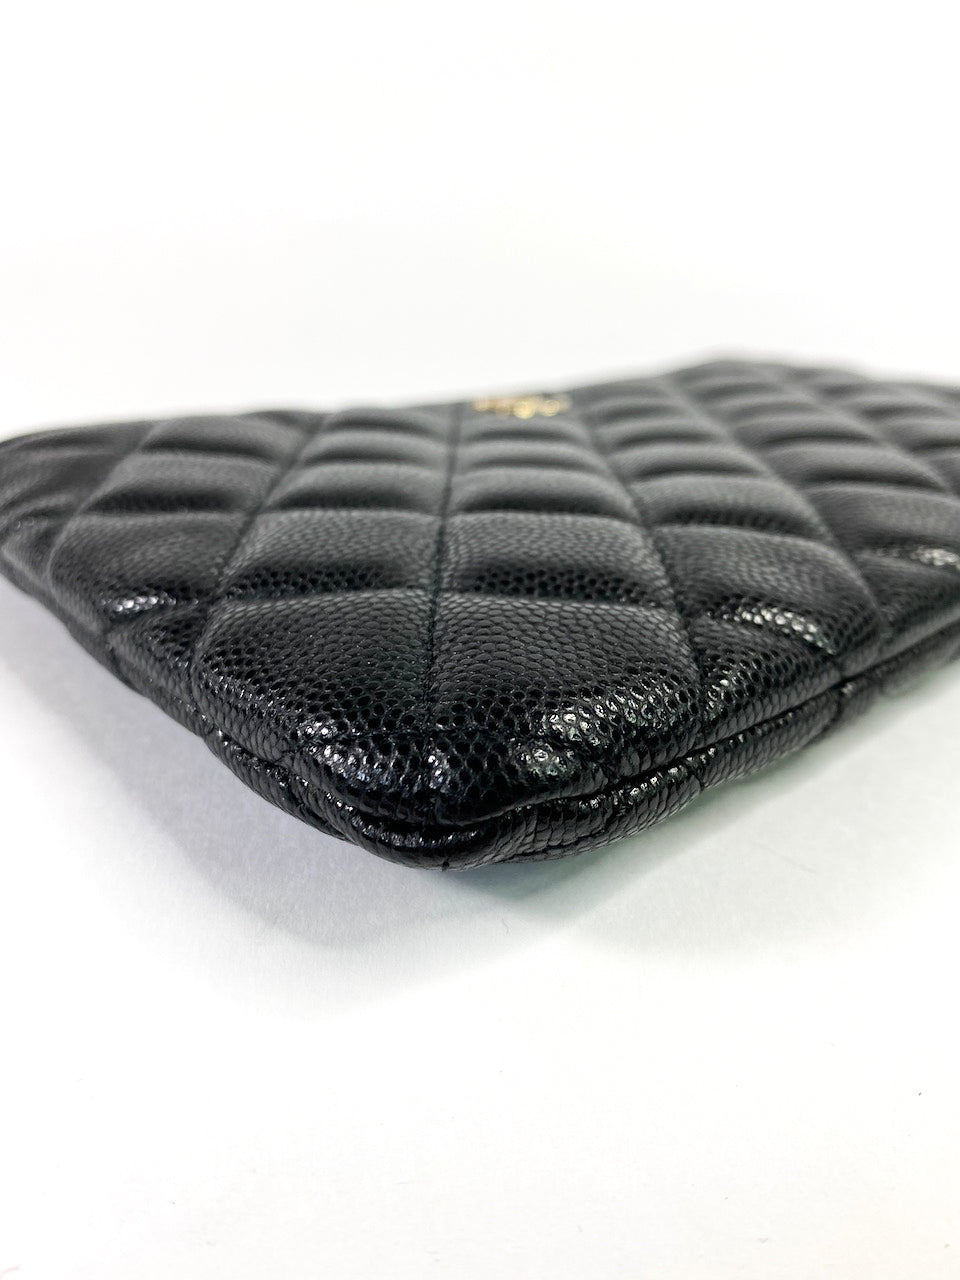 Chanel Black Caviar Leather Clutch - As Seen on Instagram Live 12/07/20 - Siopaella Designer Exchange